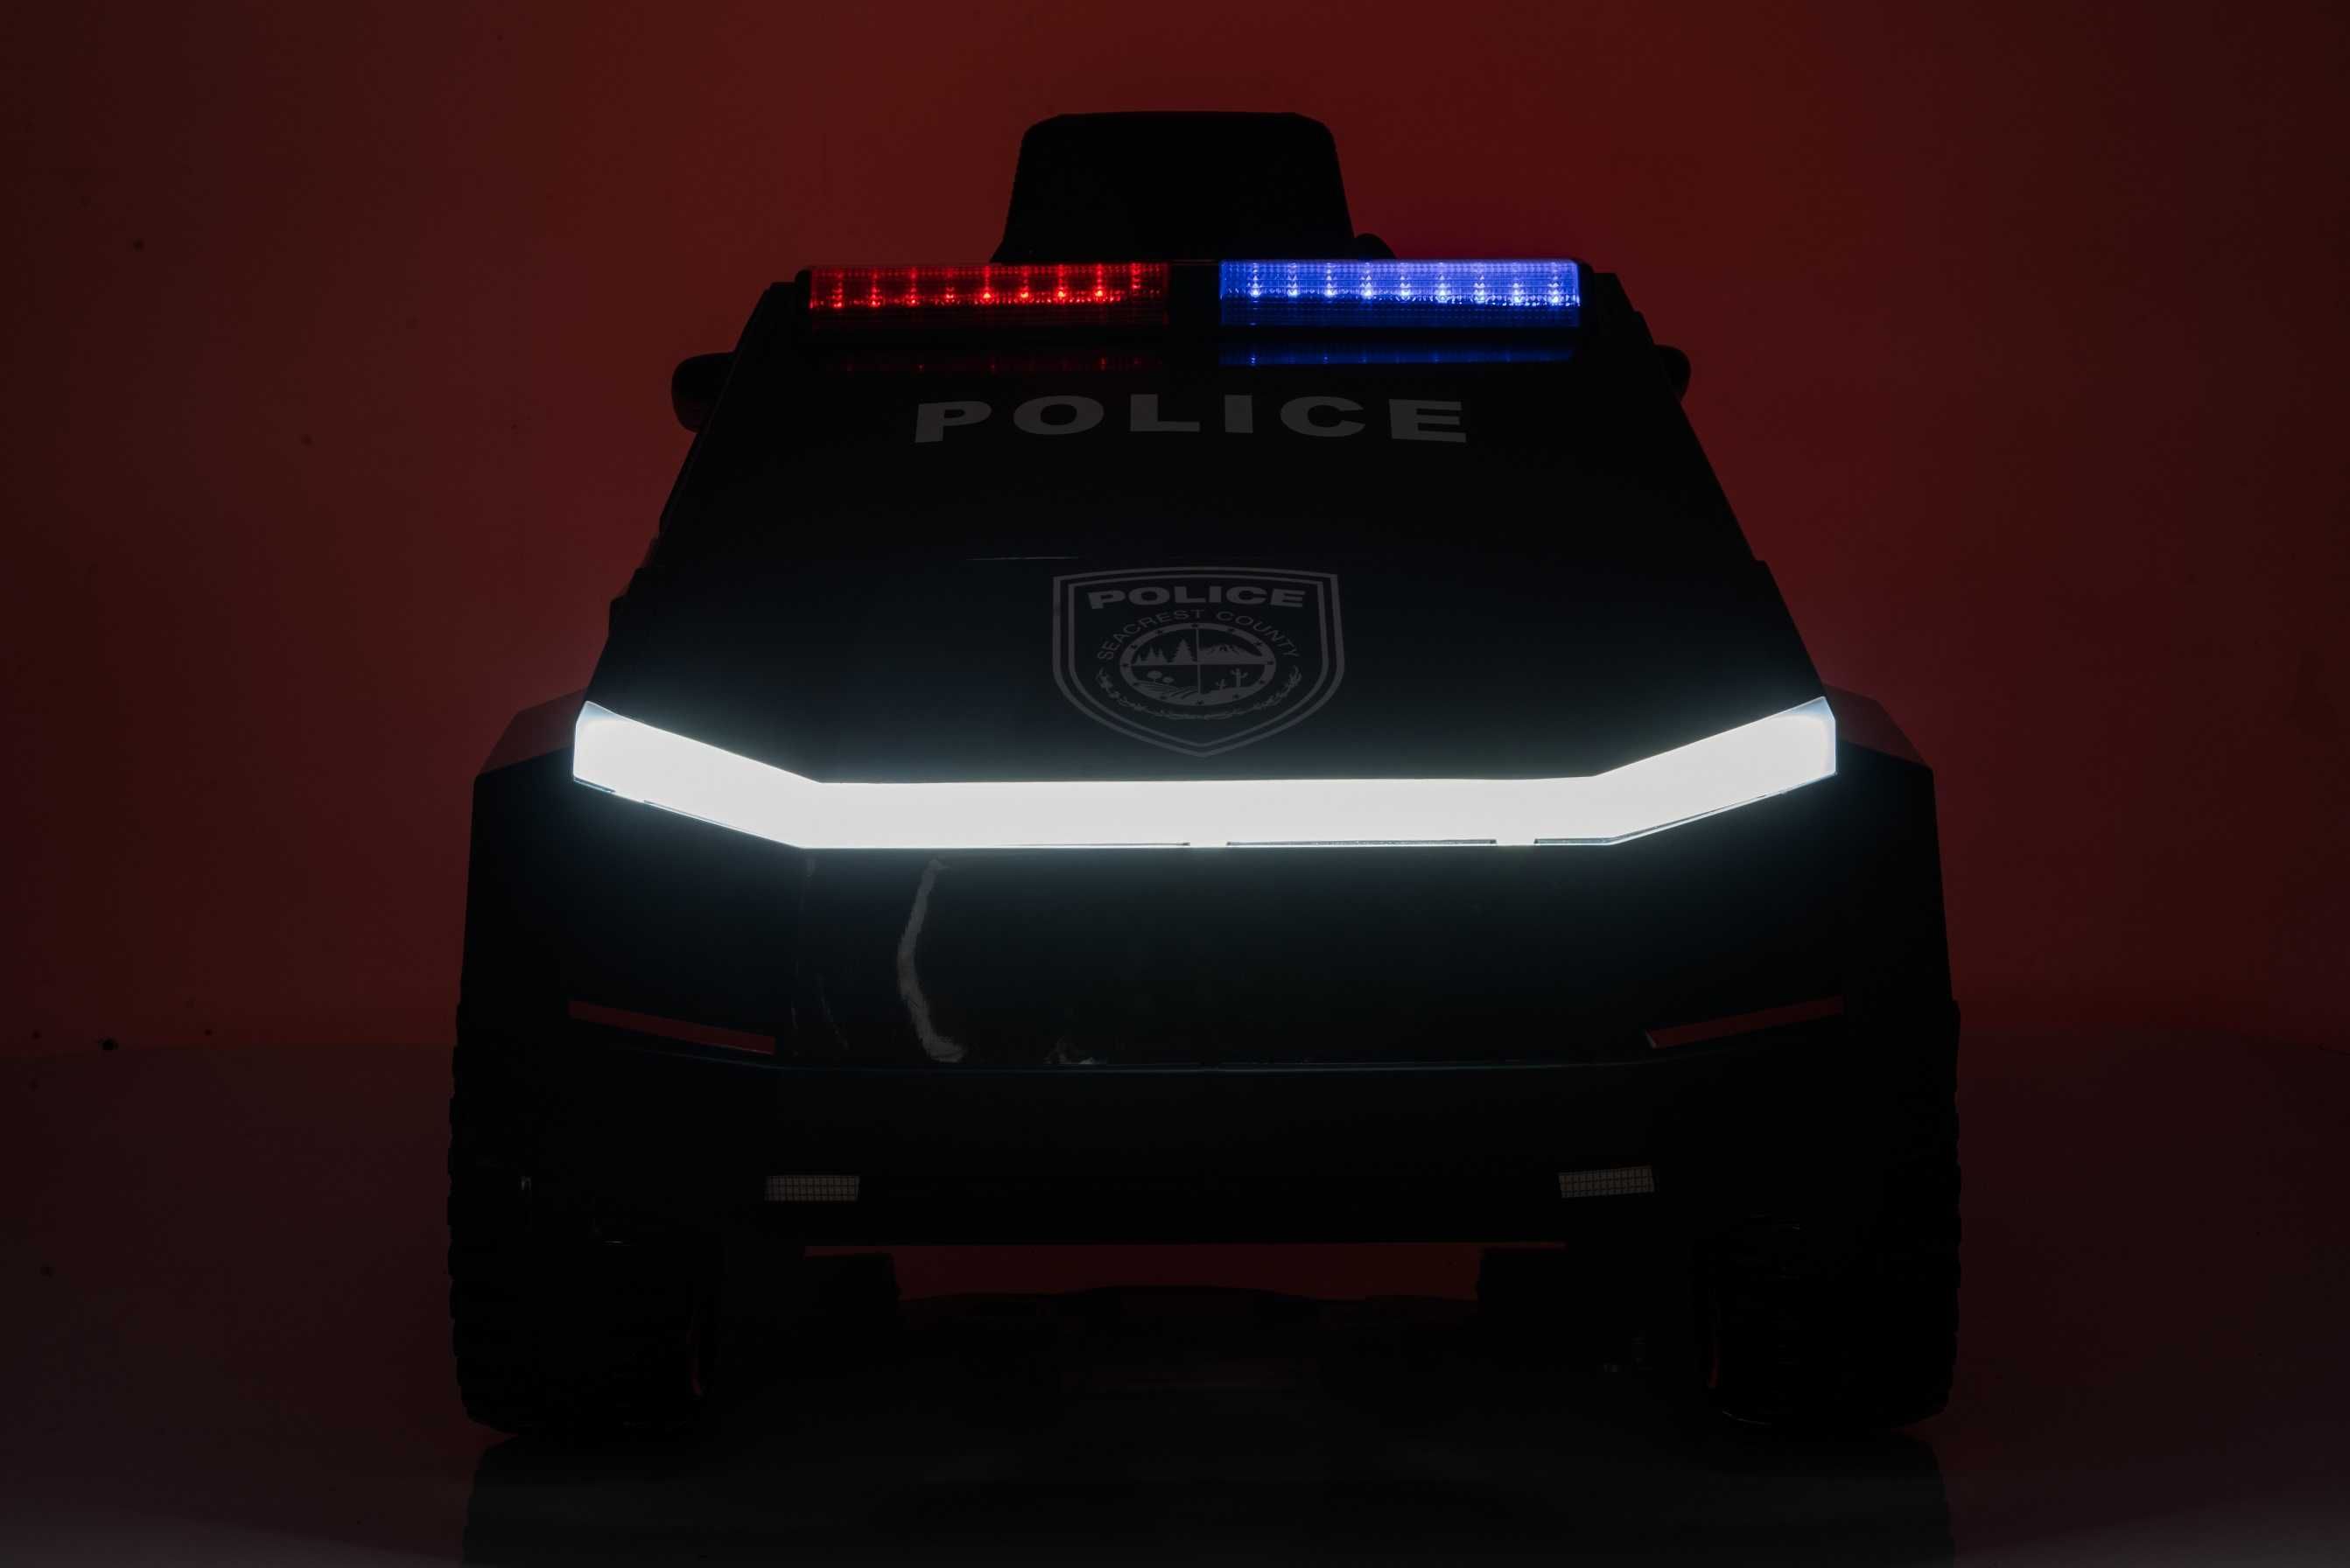 Masinuta electrica de politie Kinderauto BJ2102 2 x45W, efecte sonore